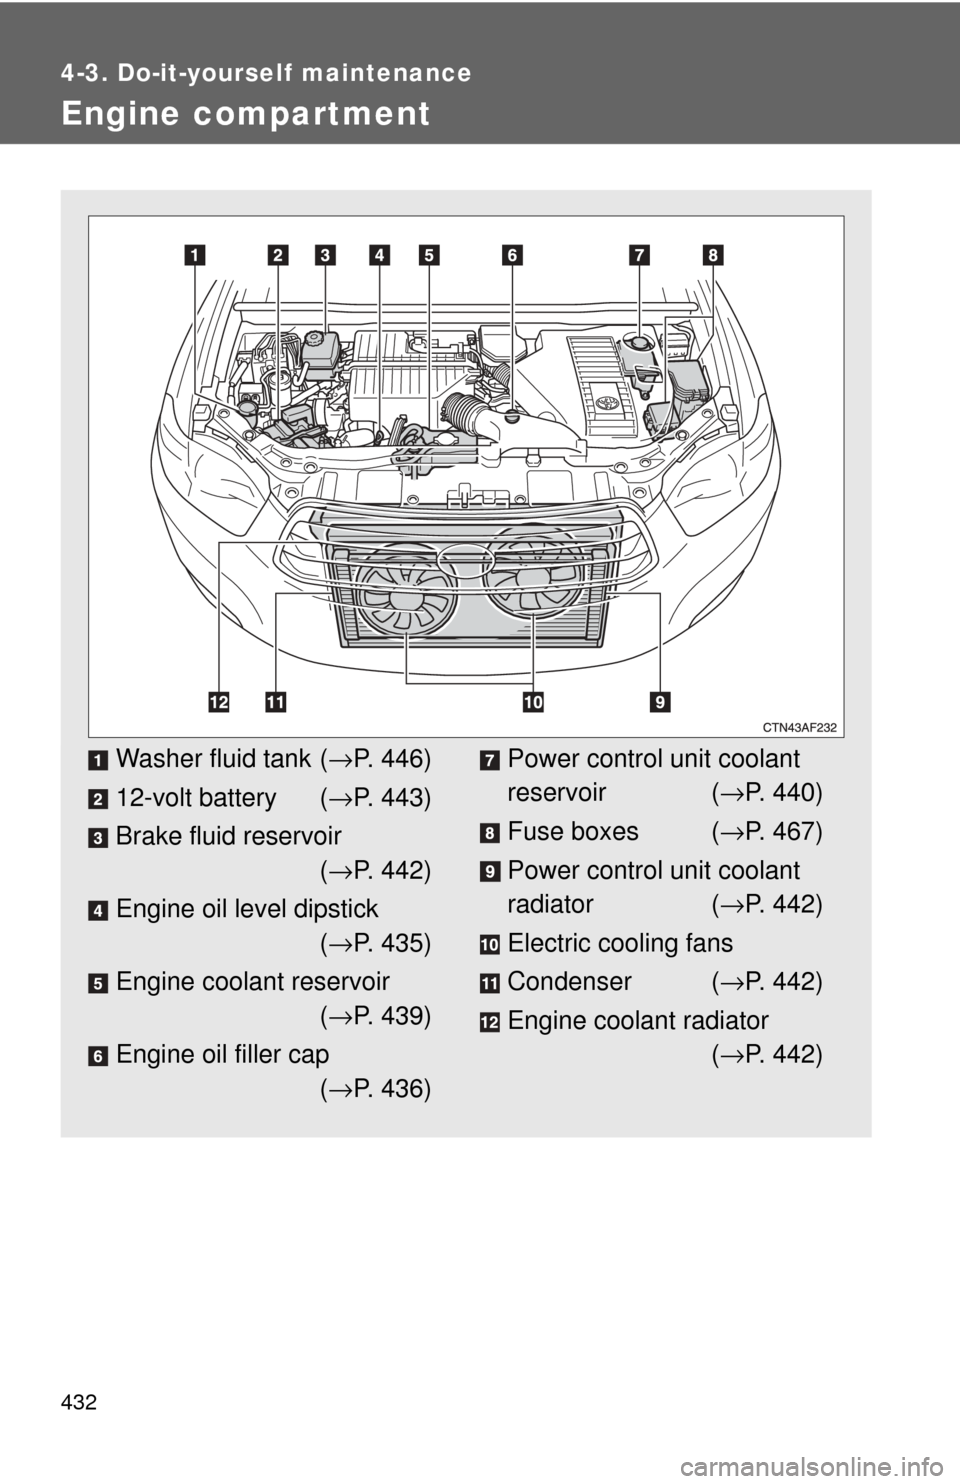 TOYOTA HIGHLANDER HYBRID 2009 XU40 / 2.G Owners Manual 432
4-3. Do-it-yourself maintenance
Engine compartment
Washer fluid tank (→P. 446)
12-volt battery ( →P. 443)
Brake fluid reservoir (→ P. 442)
Engine oil level dipstick (→ P. 435)
Engine coola